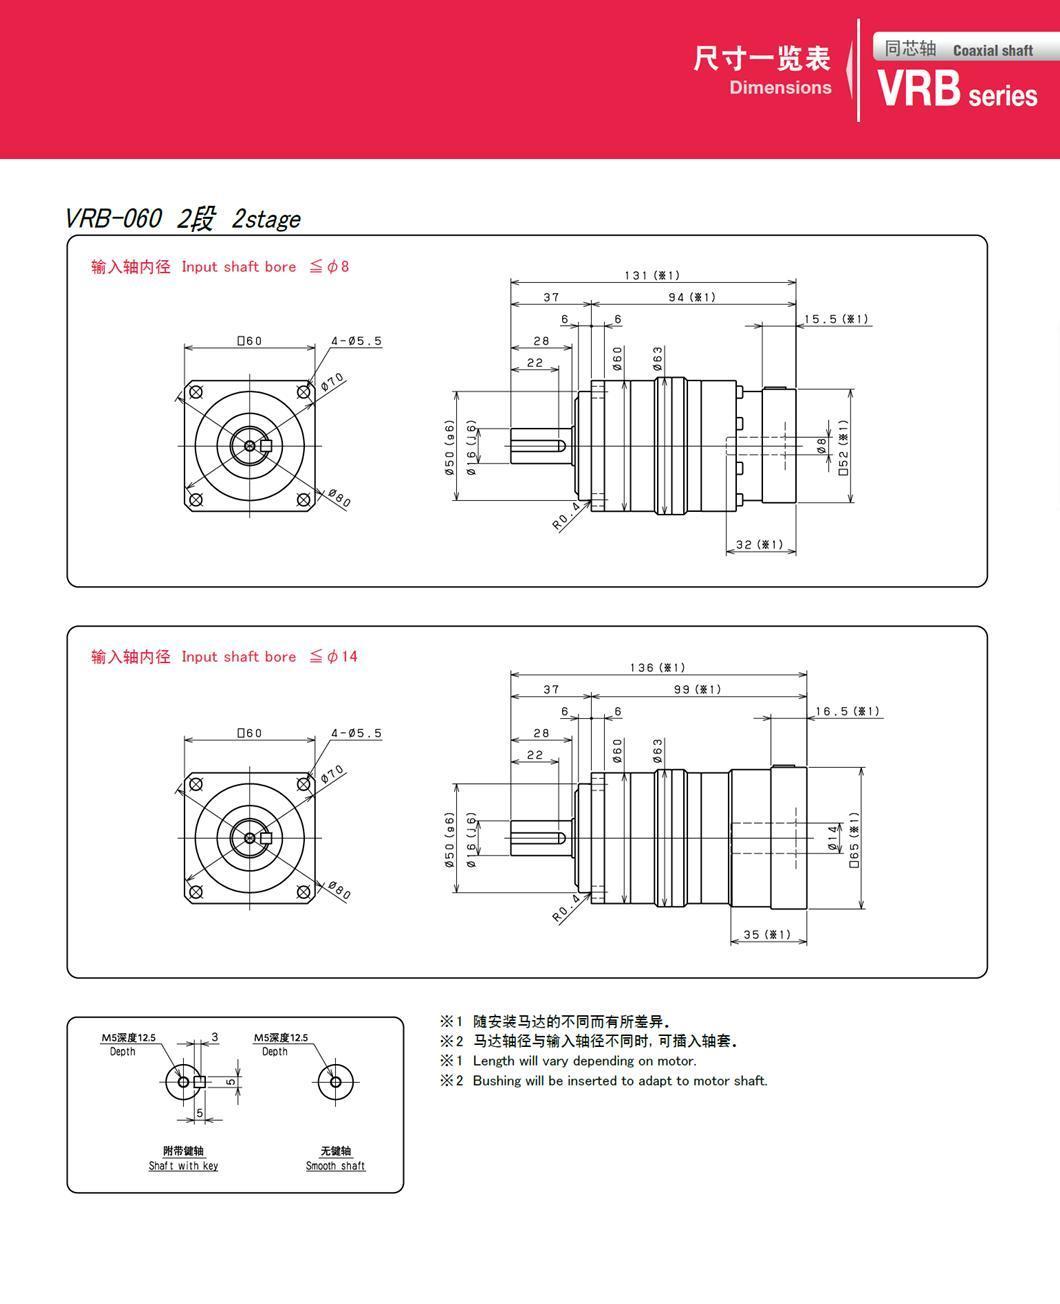 Shimpo Vrb-060c-10-K3-14bk14 Laser Engraving Machine for Servo Motor Reducer